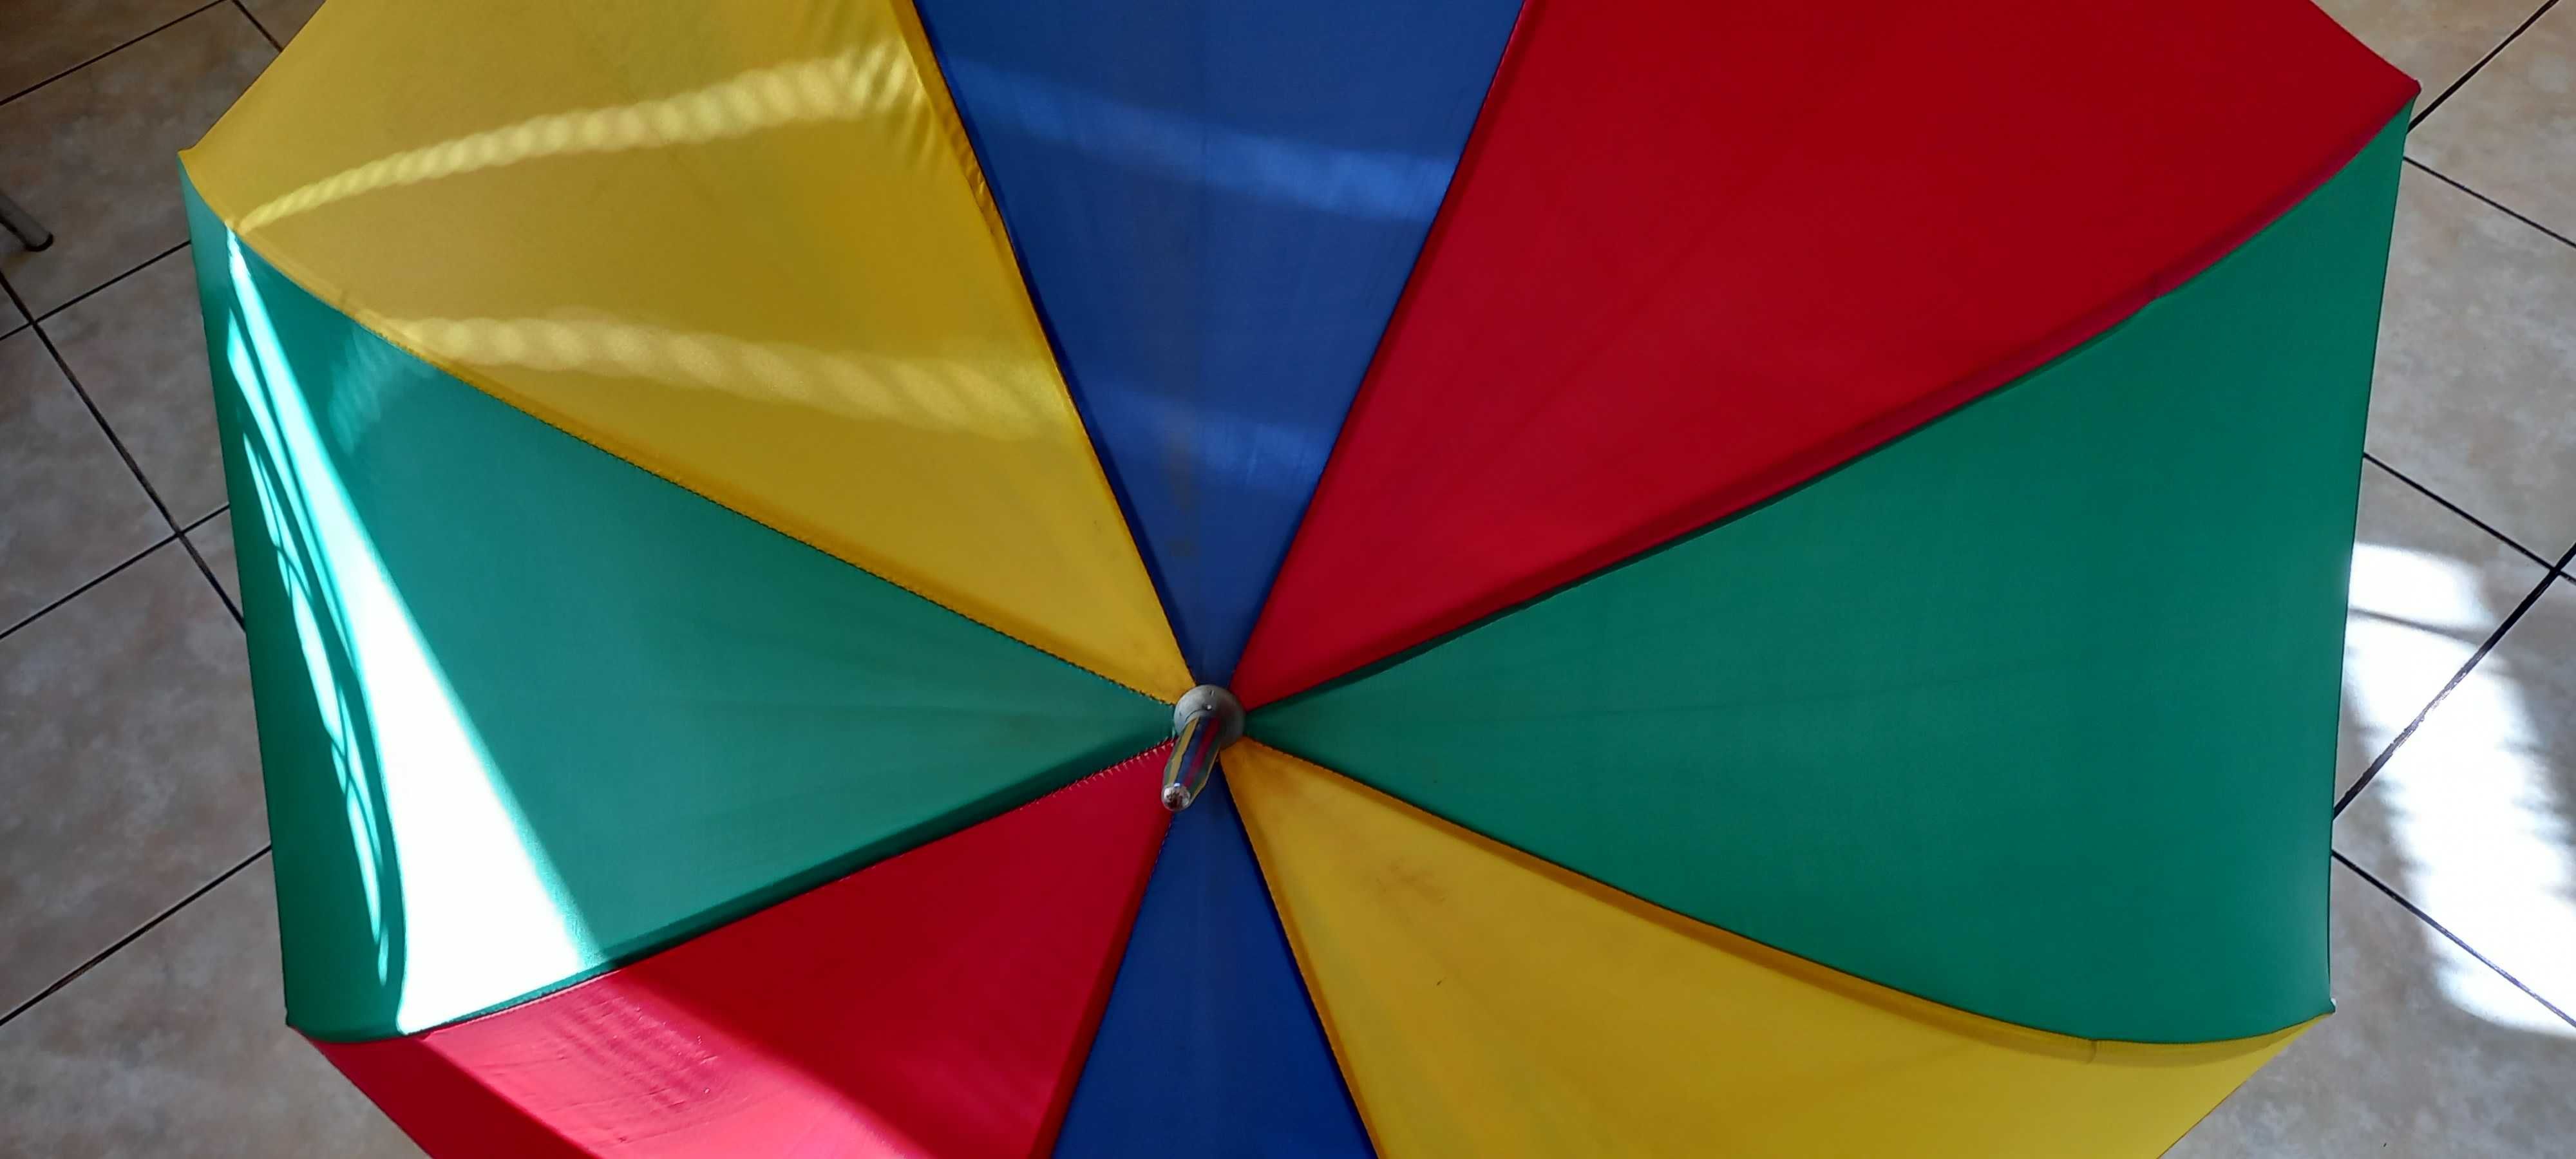 Parasolka damska duża kolorowa